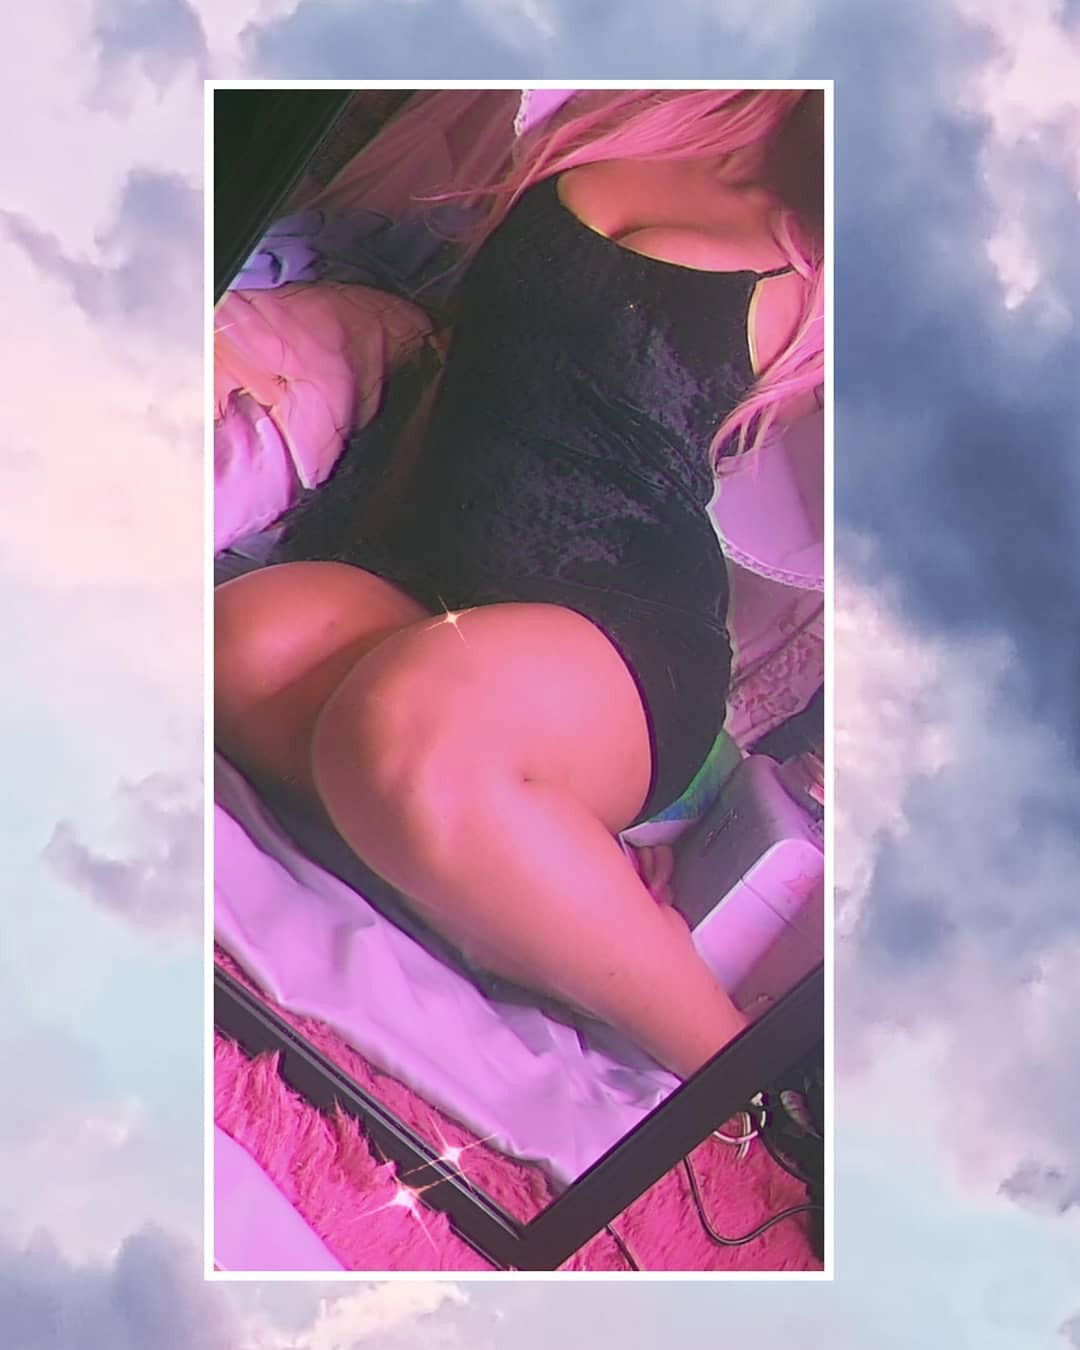 Photo by Yuki Izanami with the username @PrincessYuki, who is a star user,  October 1, 2020 at 1:04 AM and the text says 'Internet Princess 👩🏽‍💻
Bringing you that little black dress
 💞💞💞💞💞💞💞💞💞💞💞💞
*
*
*
#internetprincess #egirl #pastel #aesthetic #pinkaesthetic #kawaii #blackgirlsarekawaii
#ａｅｓｔｈｅｔｉｃ #cosplay #ebony #eroticcosplay'